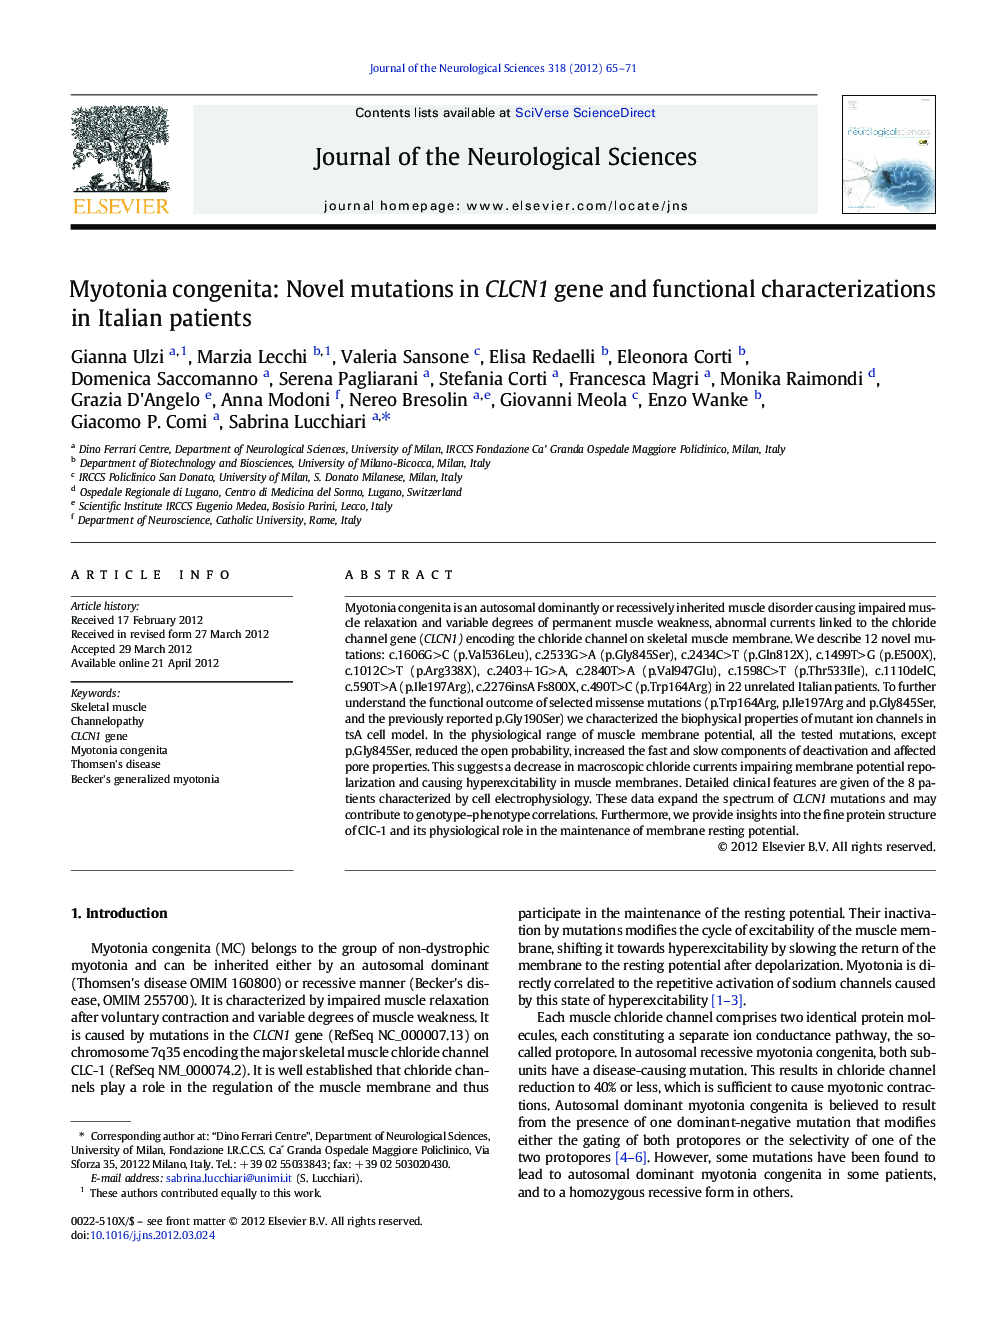 Myotonia congenita: Novel mutations in CLCN1 gene and functional characterizations in Italian patients